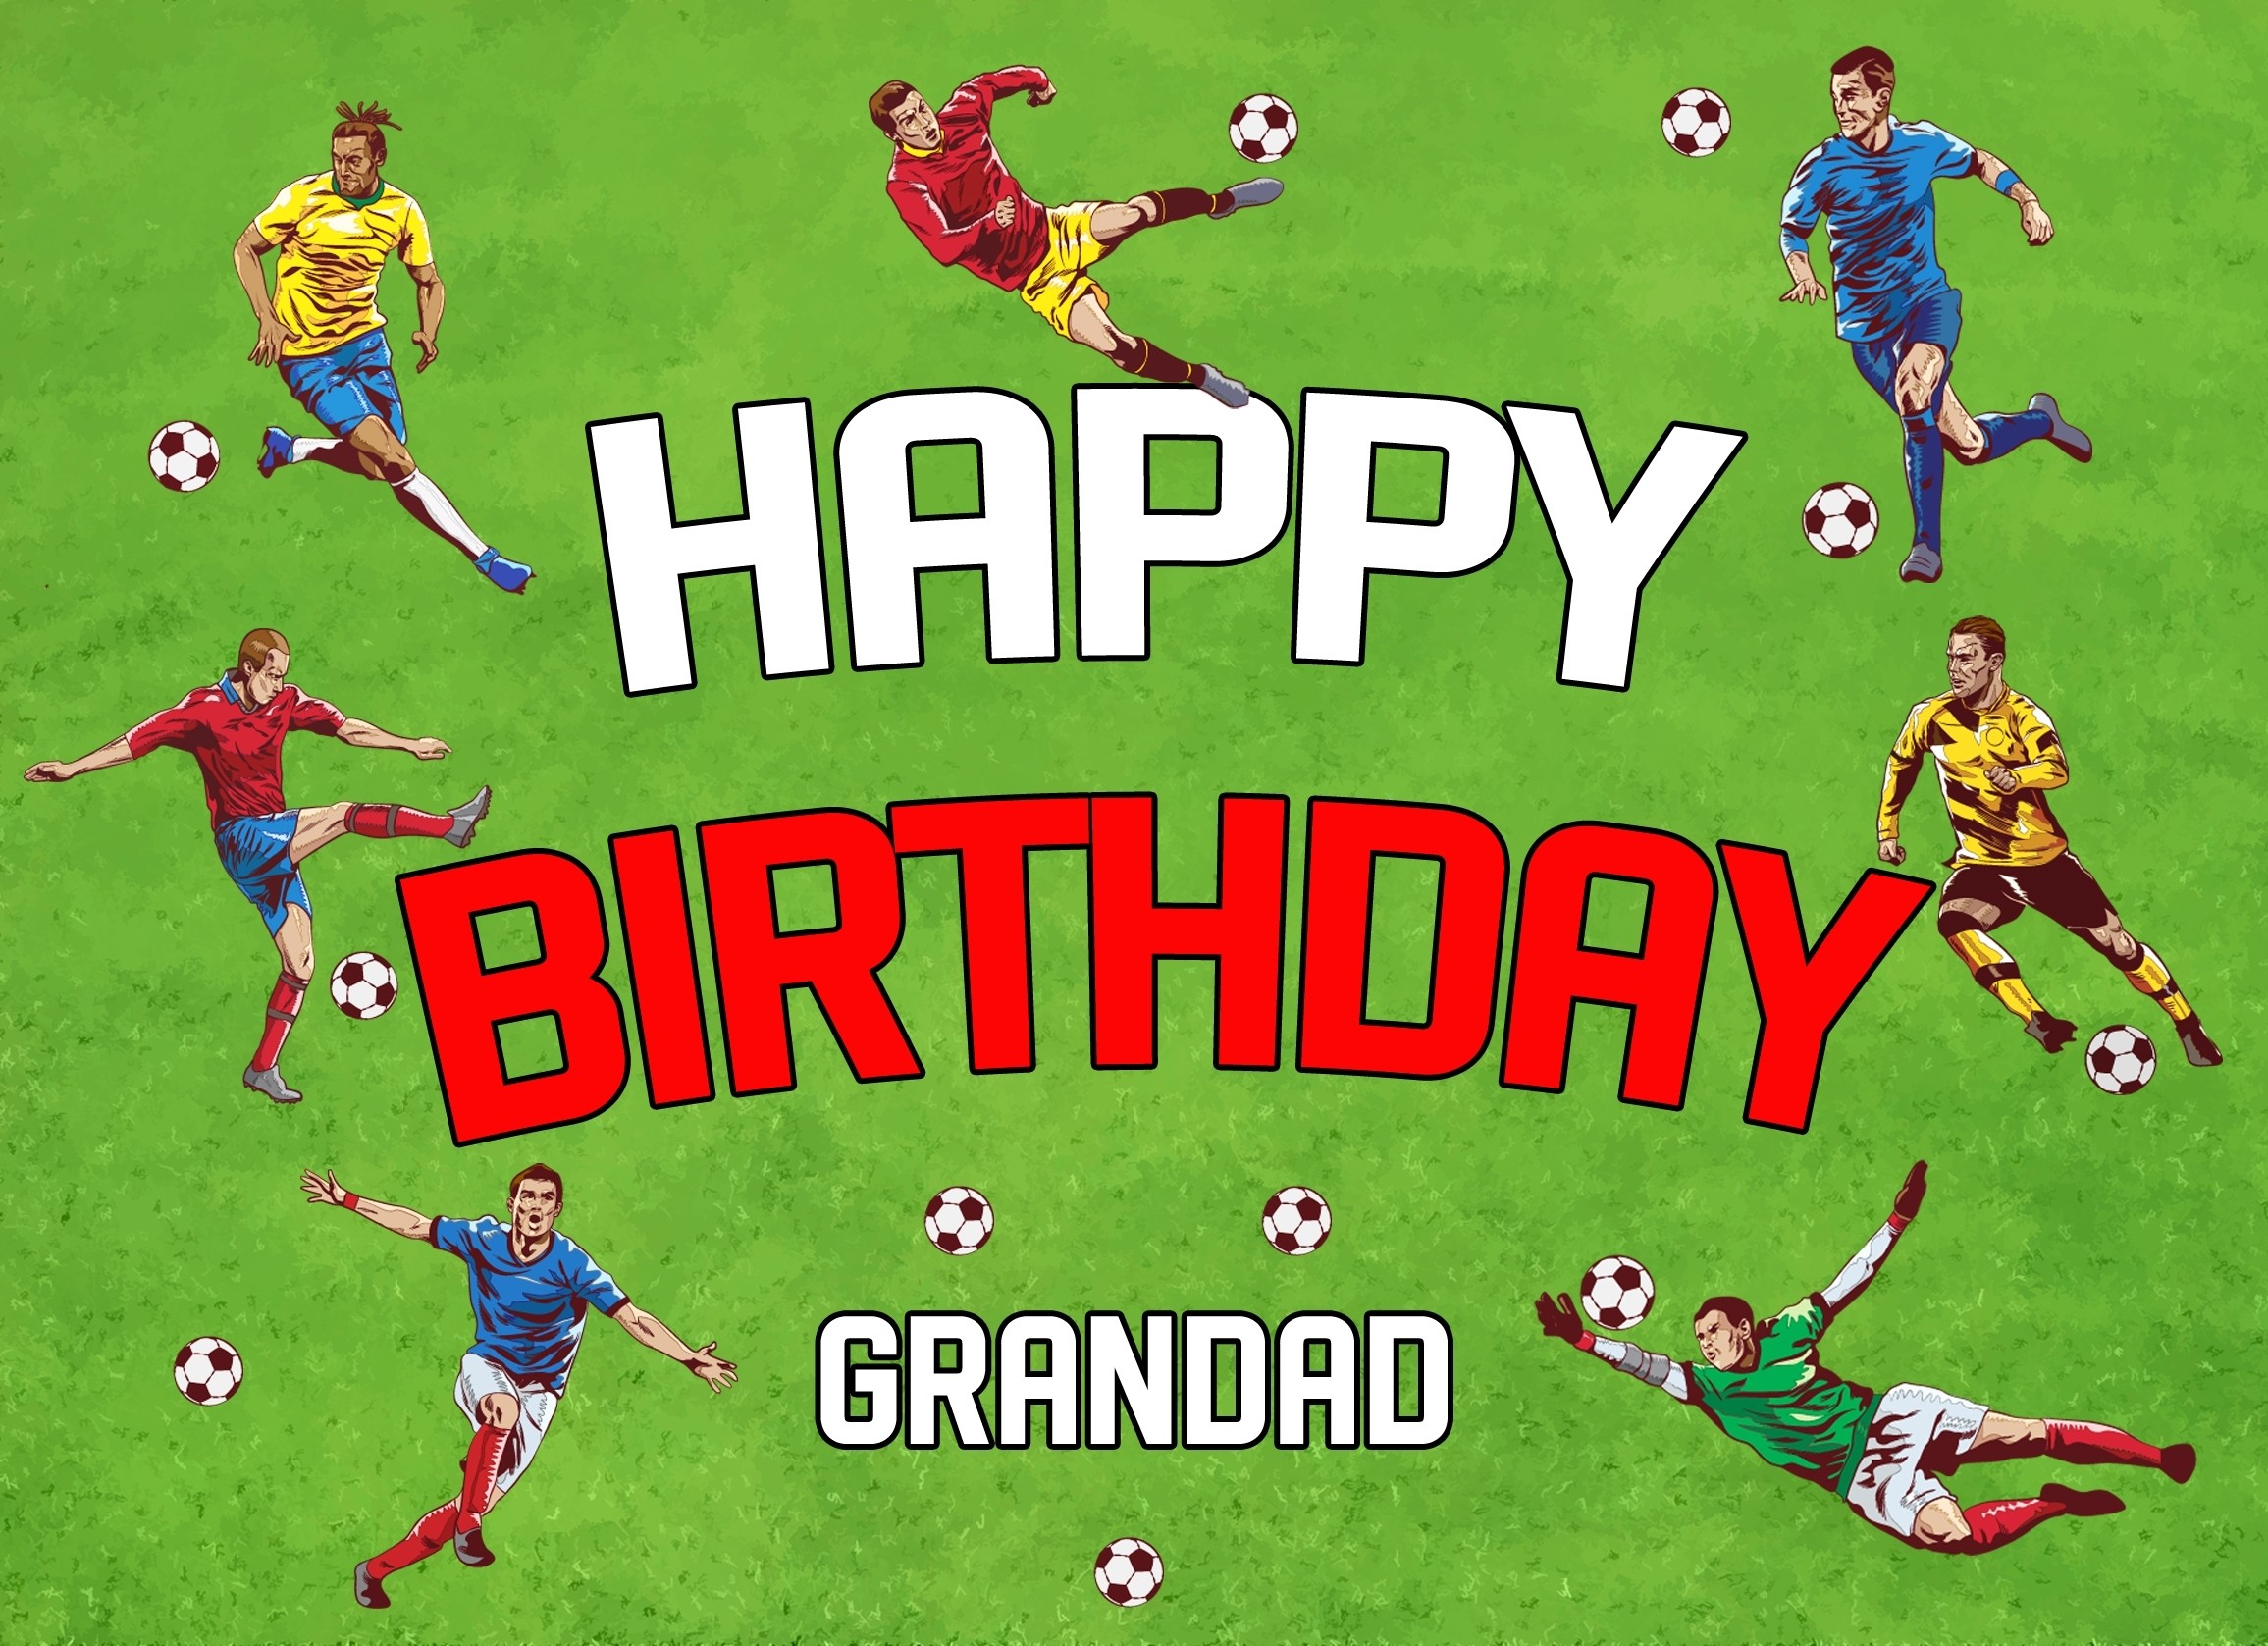 Football Birthday Card For Grandad (Landscape)